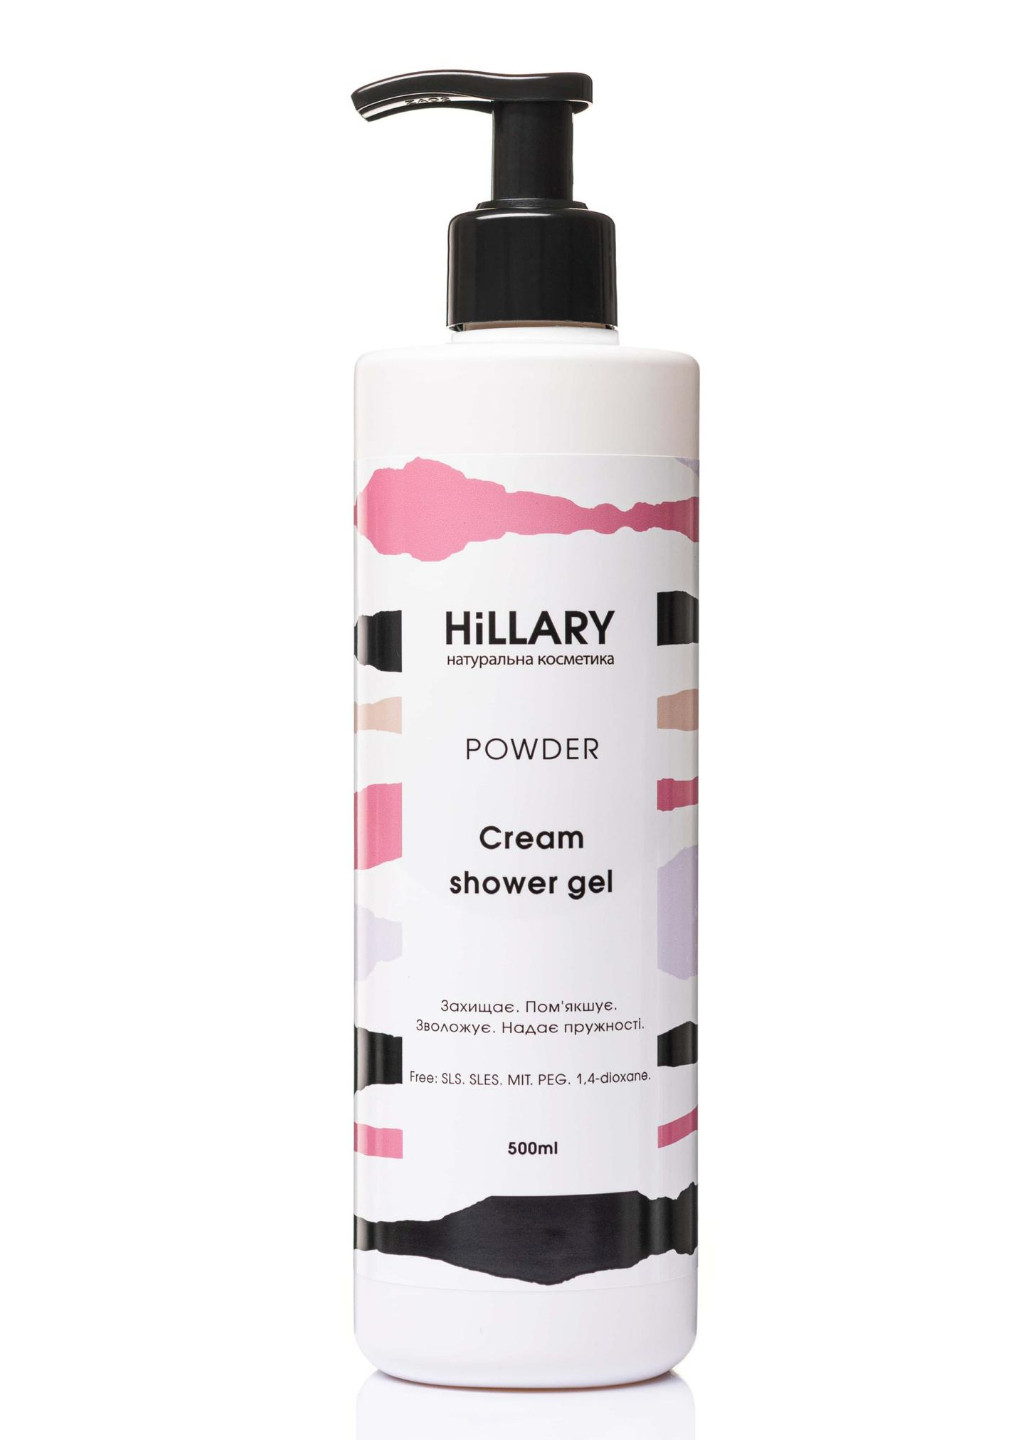 Натуральный крем-гель для душа POWDER Cream Shower Gel, 500 мл Hillary (254032630)